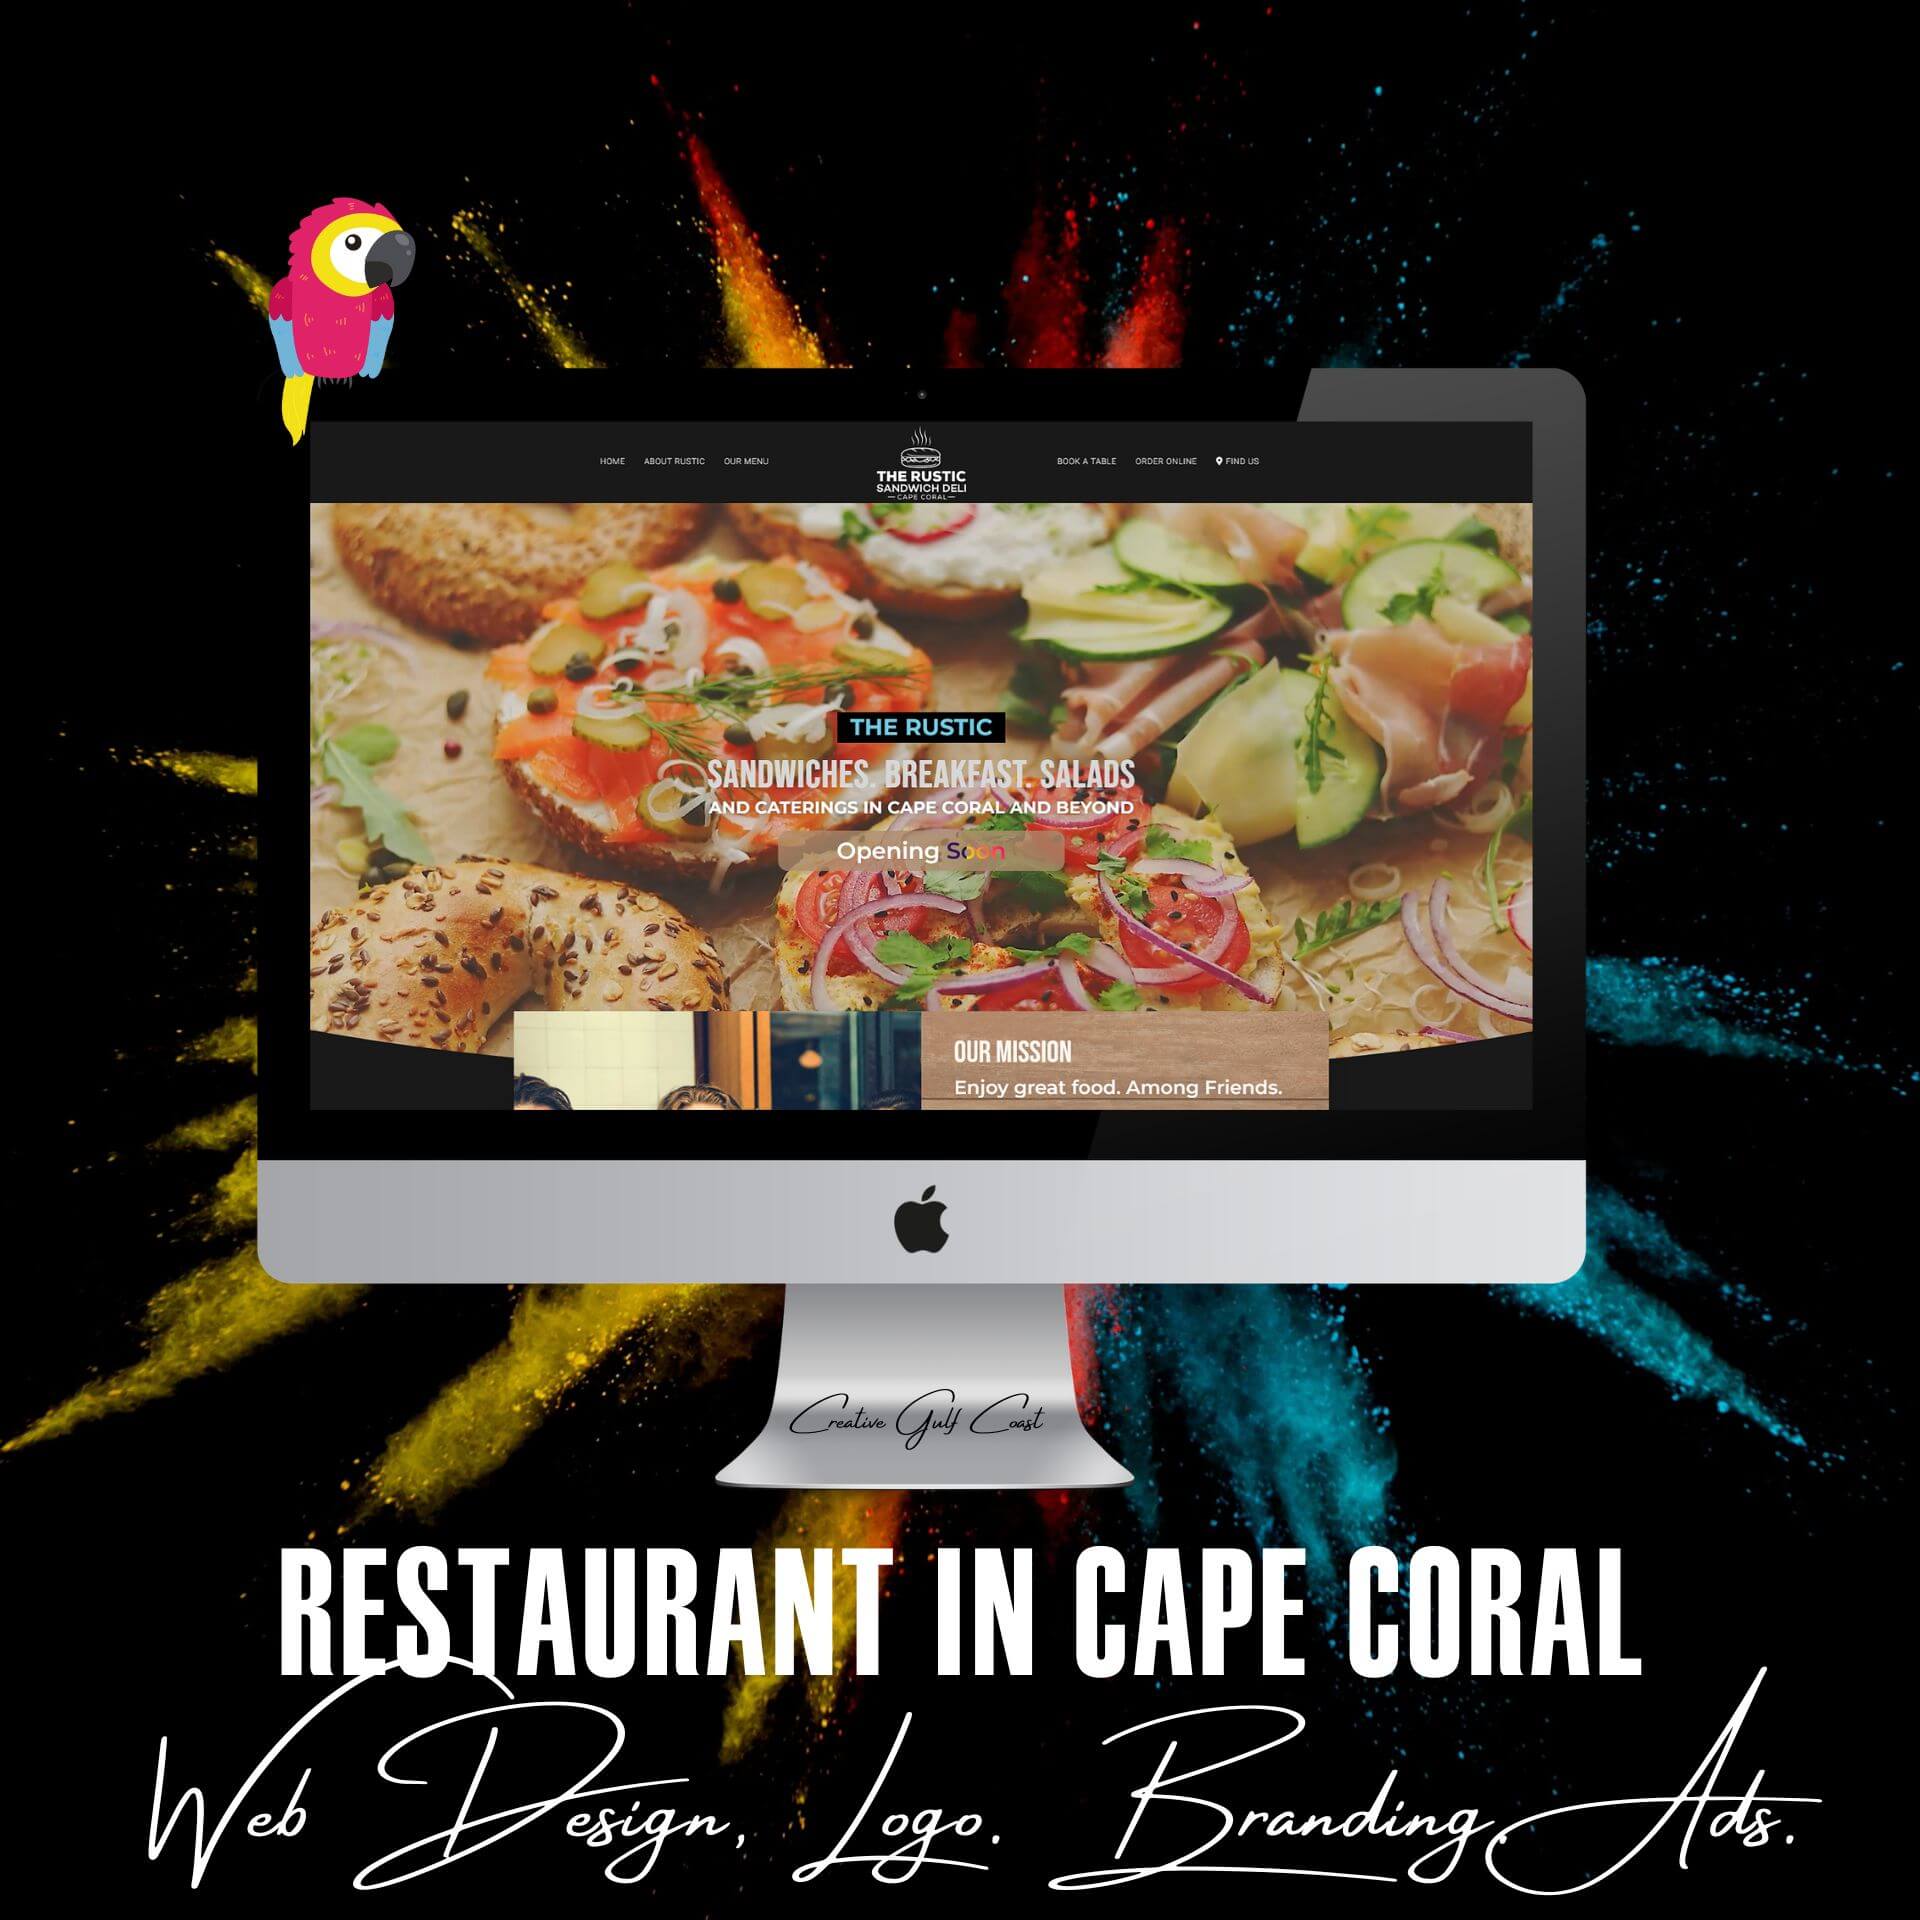 Web Design Florida - Reference Restaurant in Cape Coral - Creative Gulf Coast Marketing